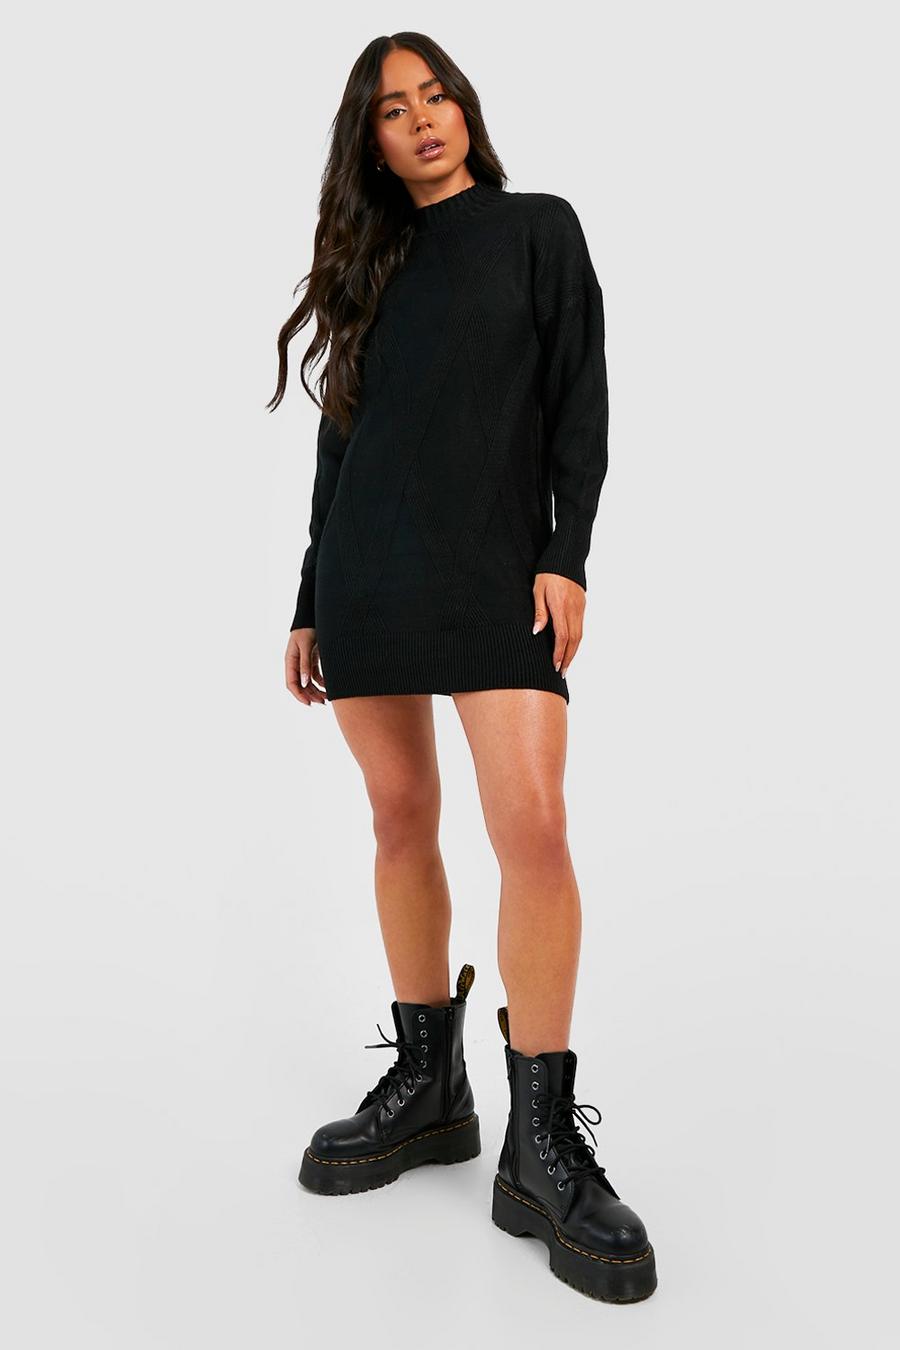 Black Petite Turtleneck Knitted Sweater Dress